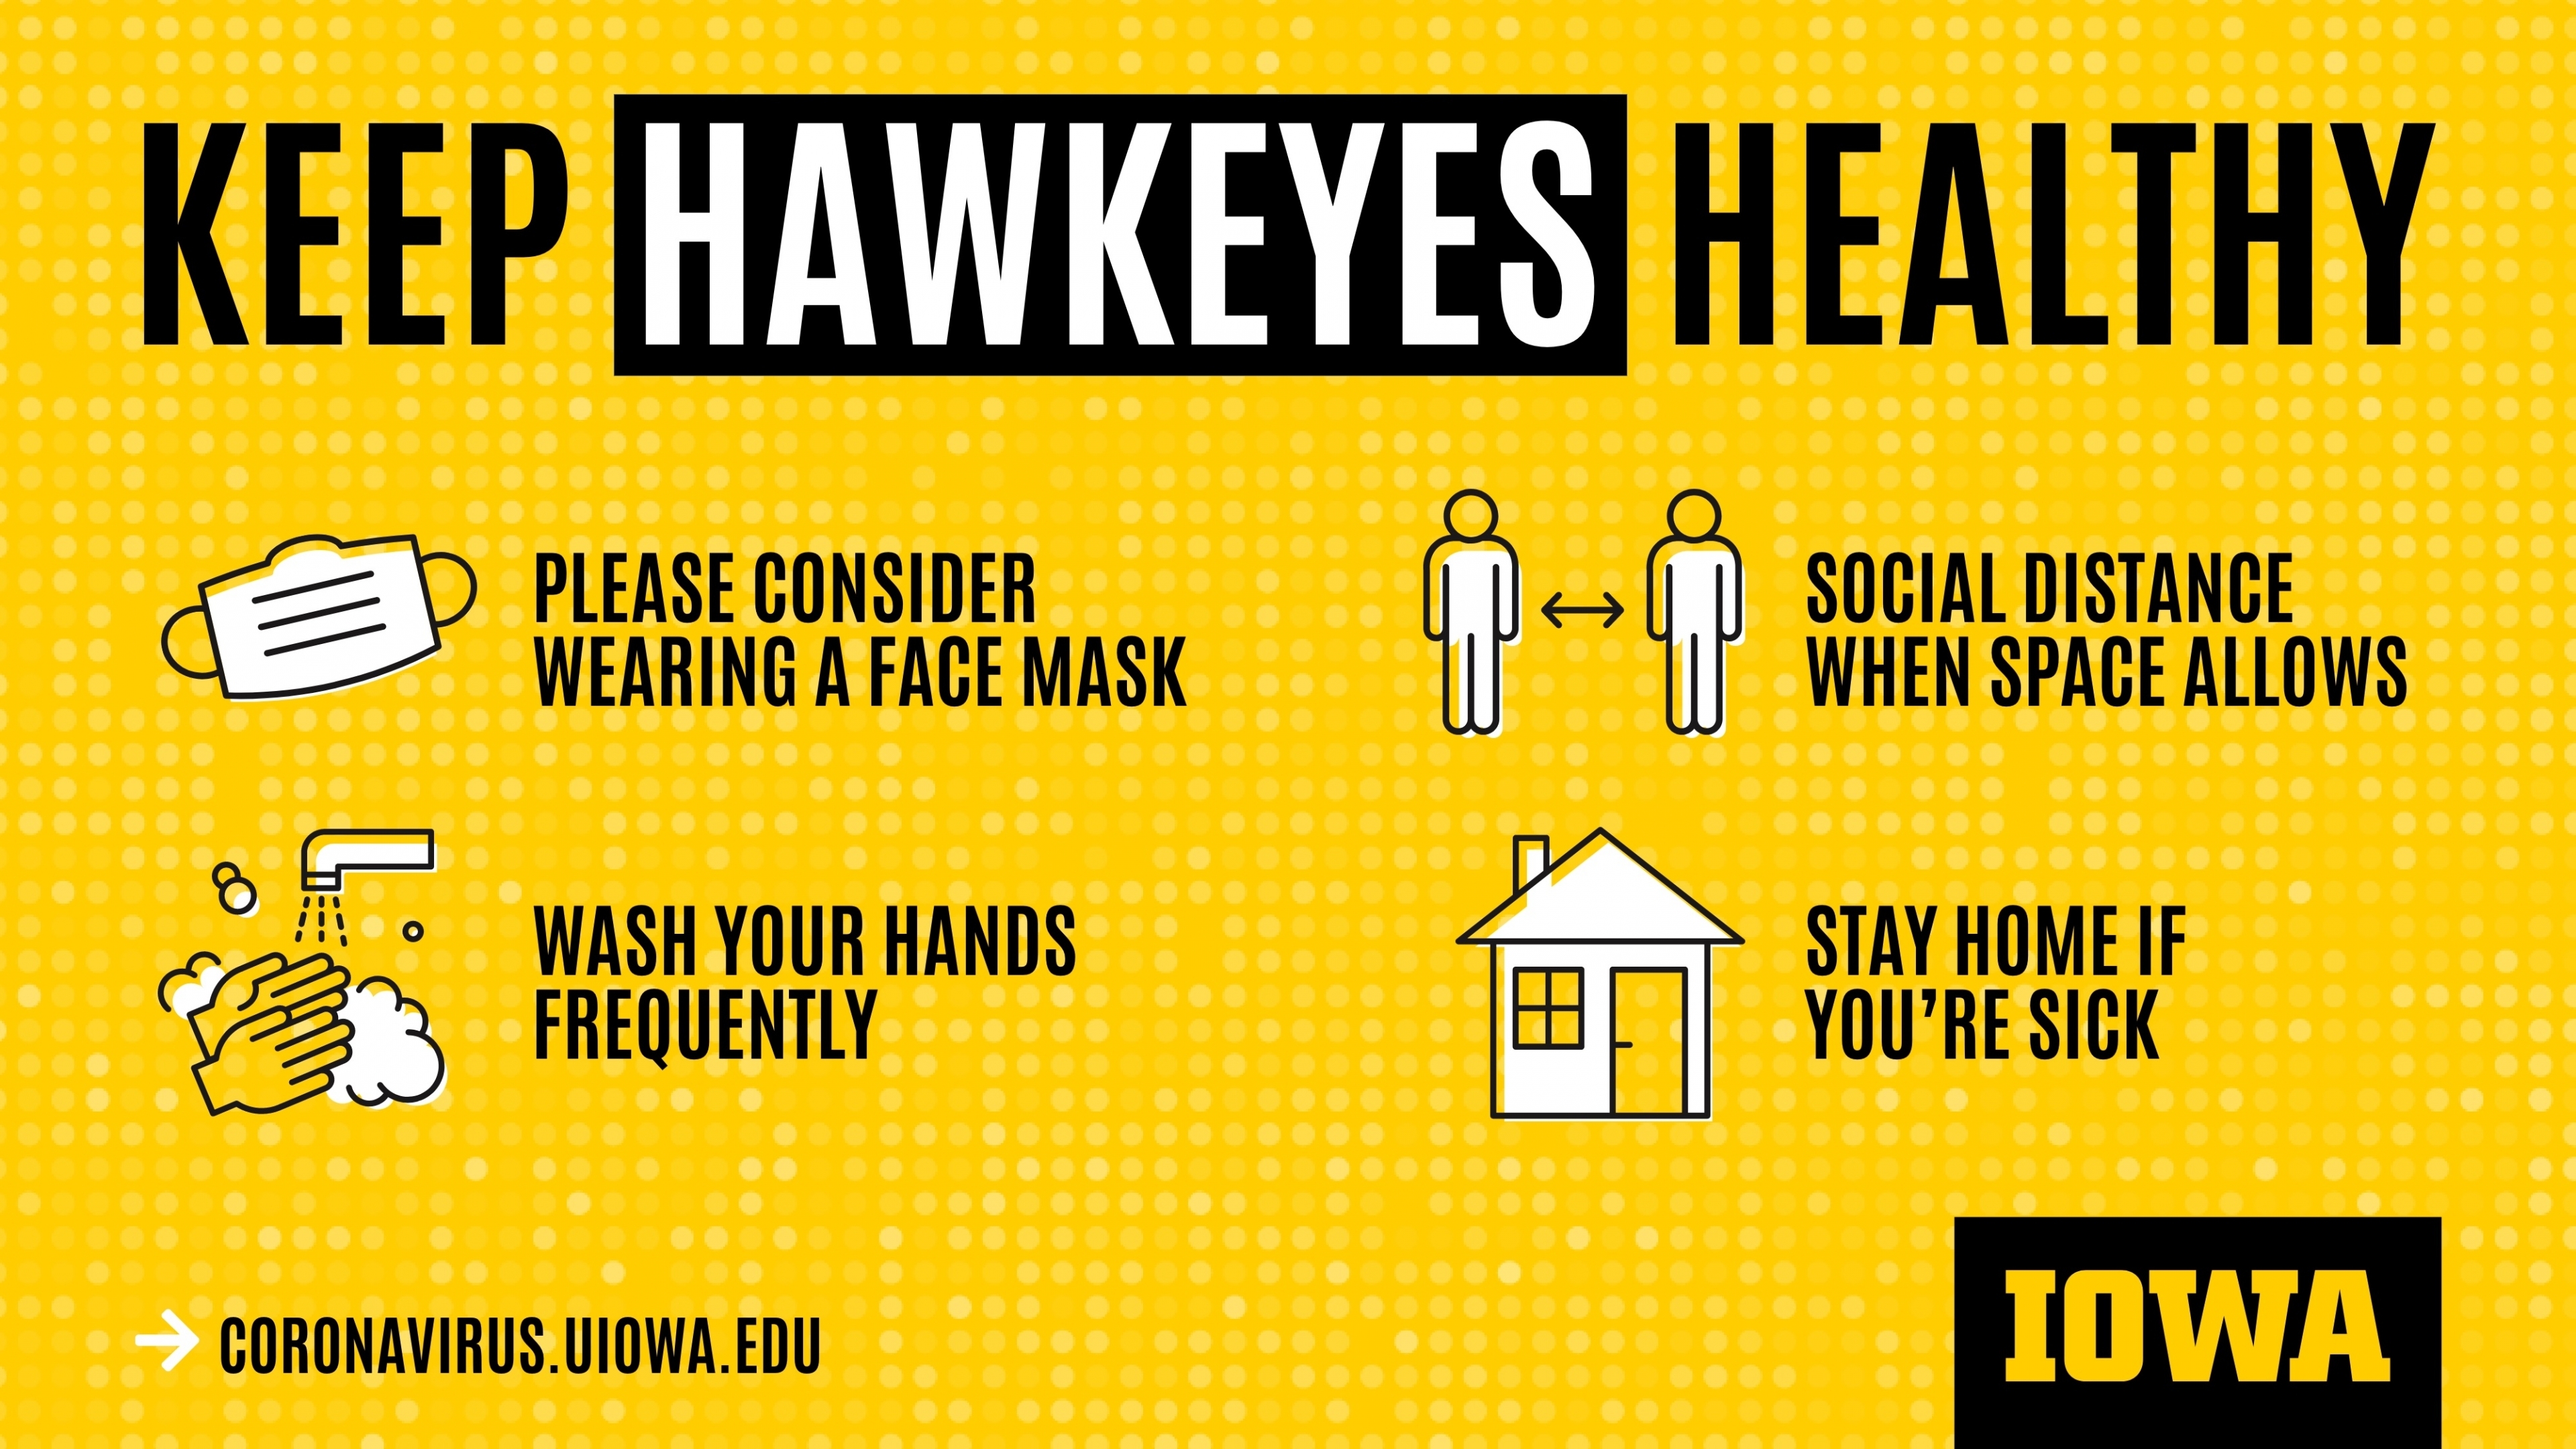 Keep Hawkeyes healthy